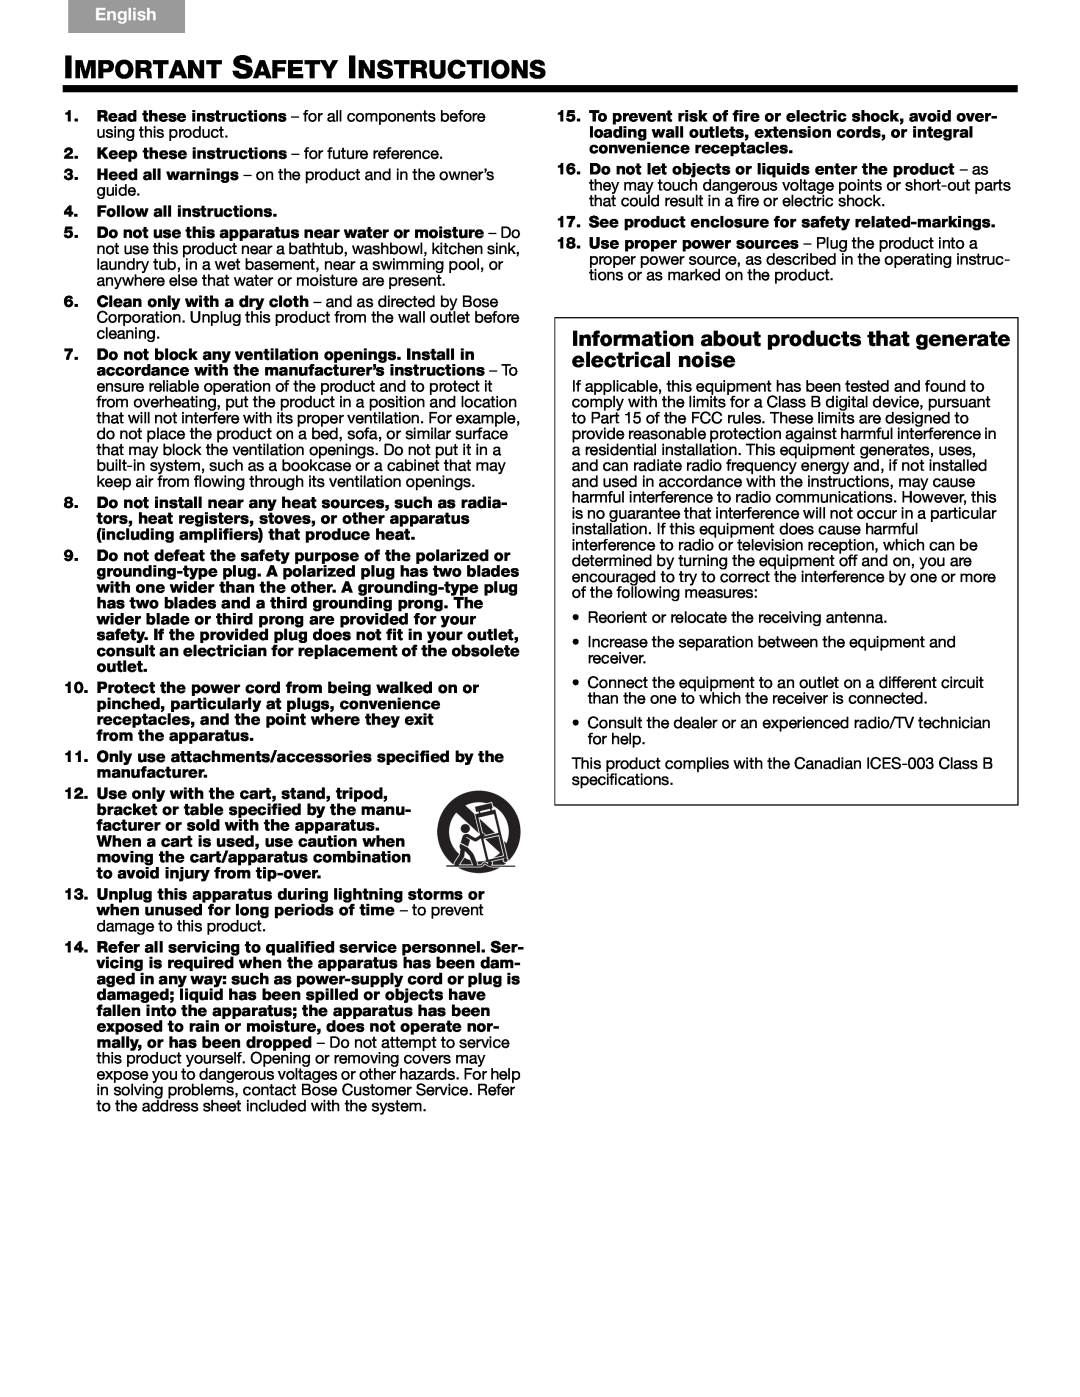 Bose Companion (R) 5, 40326 manual Important Safety Instructions, English, Español Français 